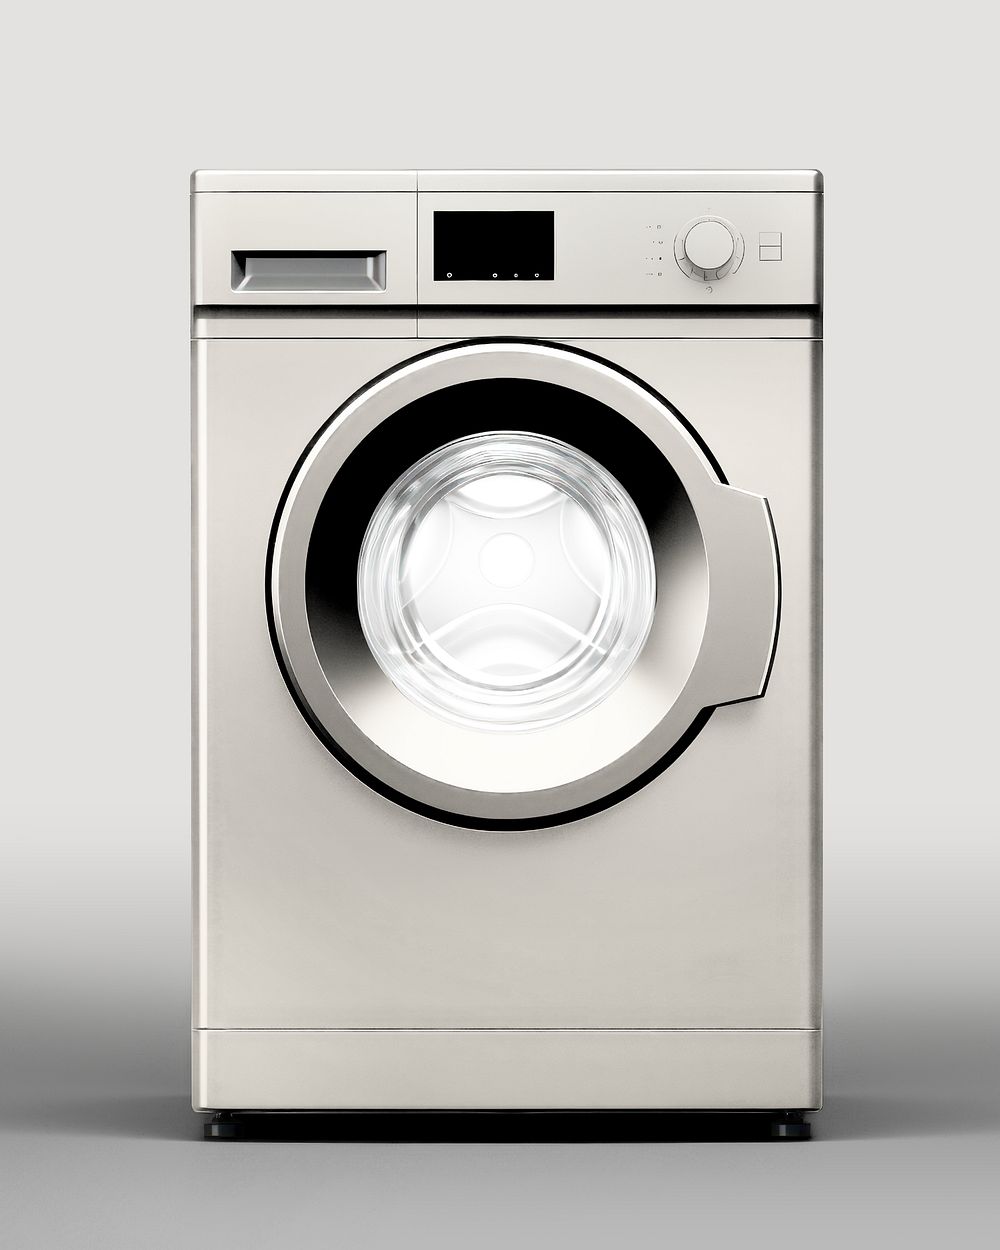 Washing machine, home appliance